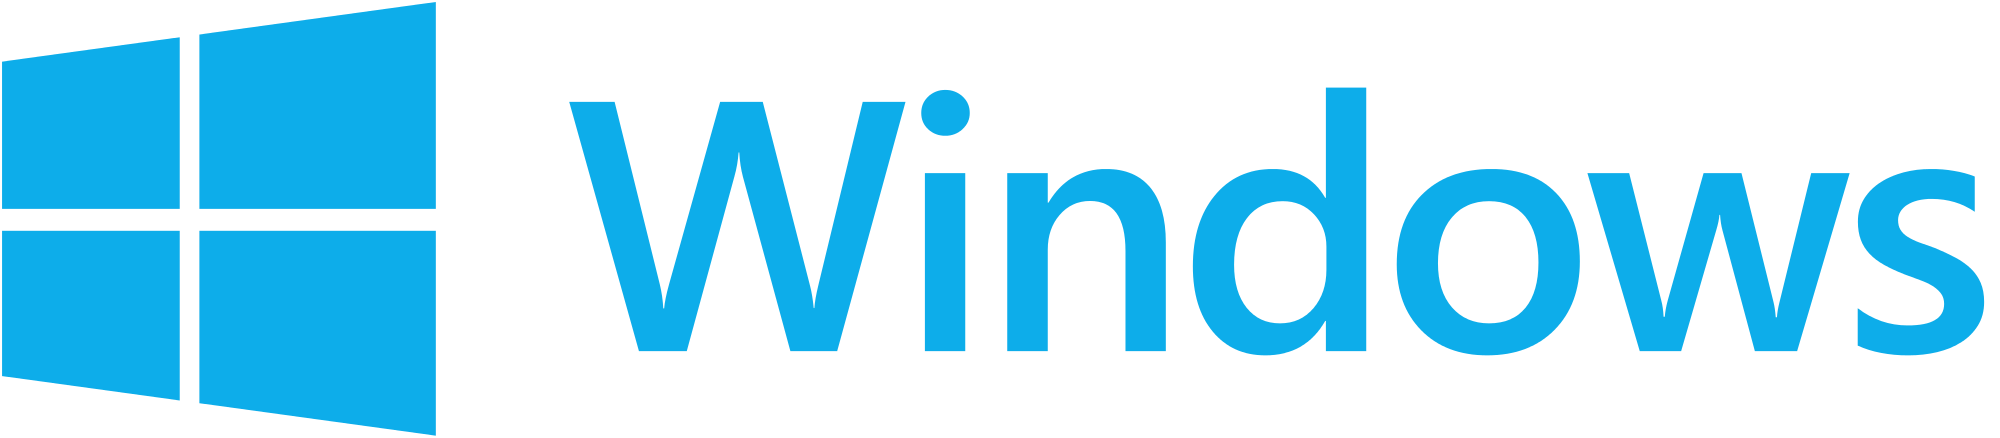 Windows Logo PNG Best Image - Windows Logo Png